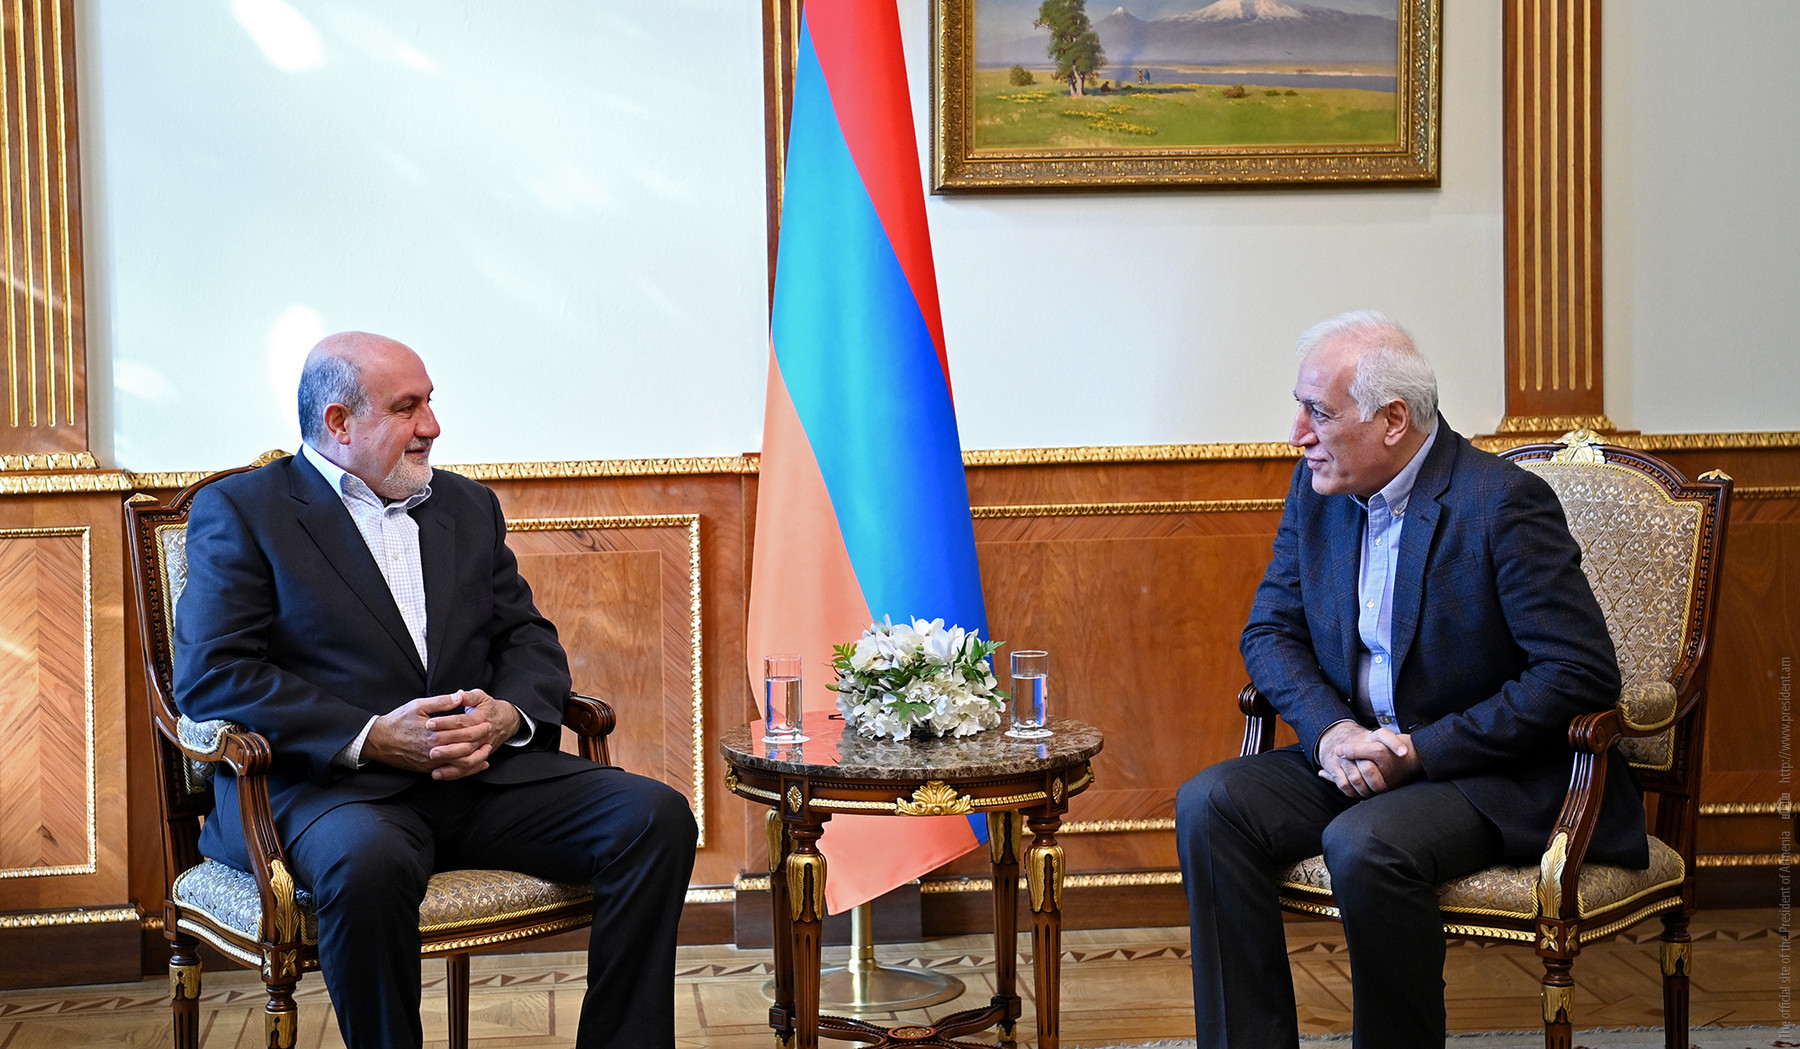 President of the Republic Vahagn Khachaturyan receives Nassim Nicholas Taleb